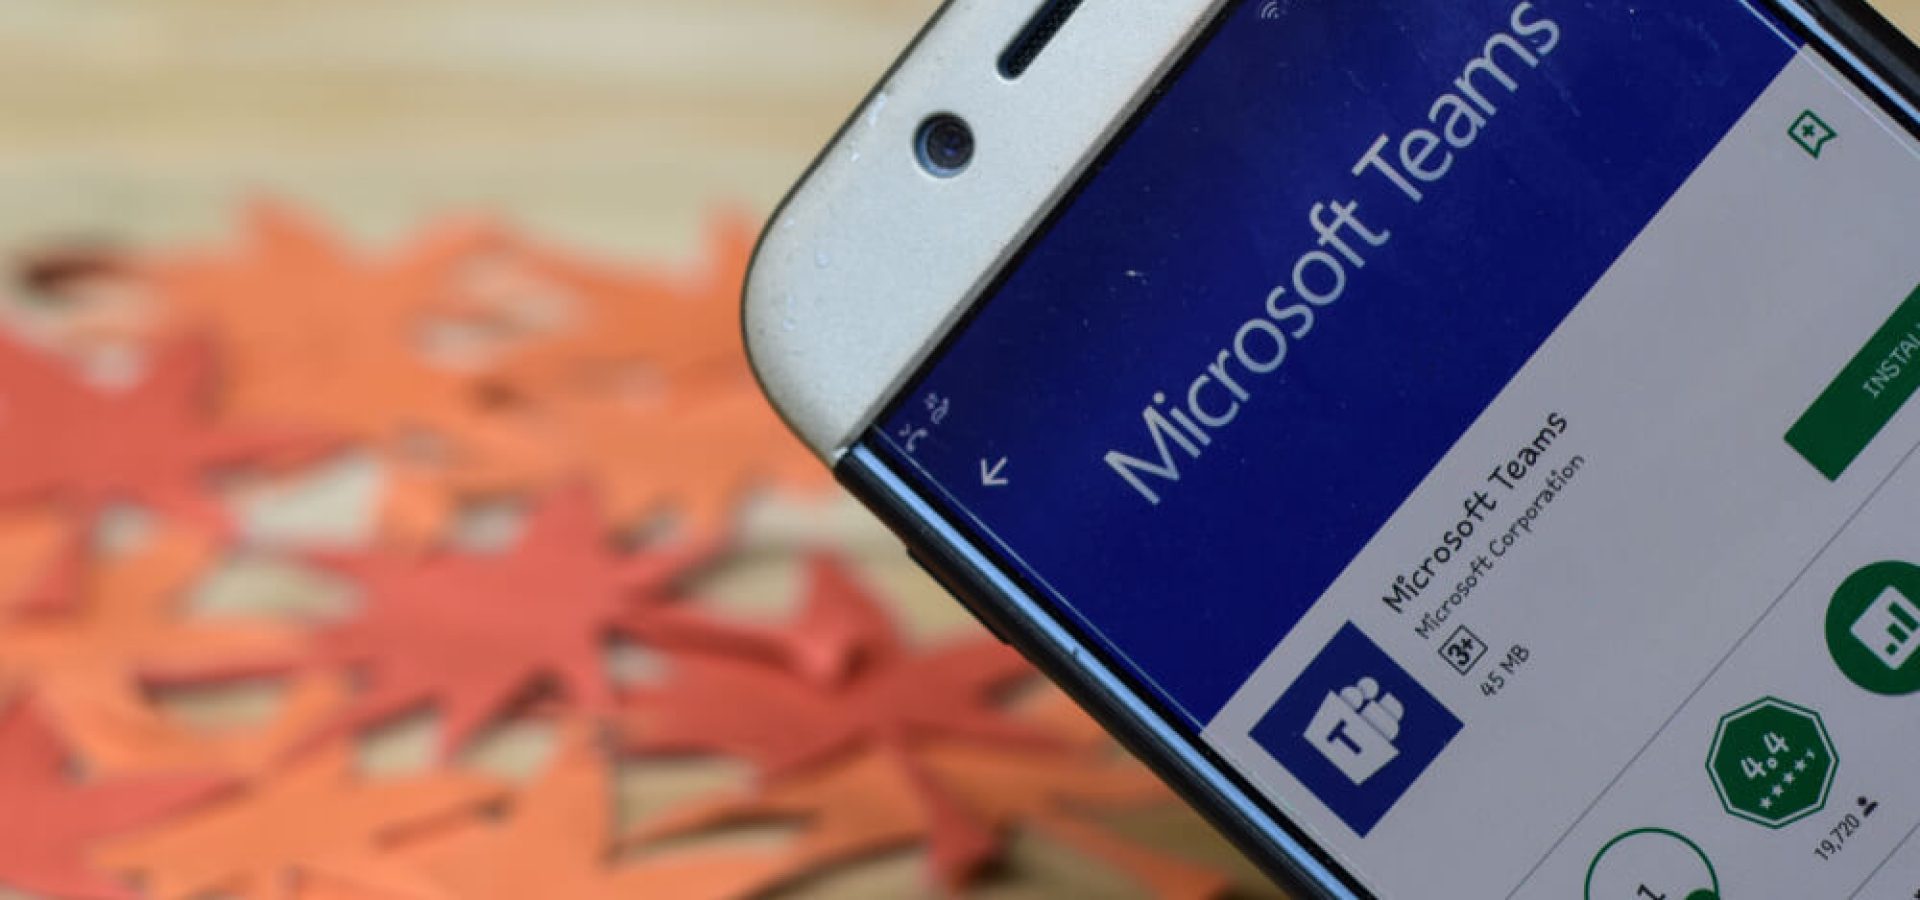 Microsoft Teams App on Smartphone screen.